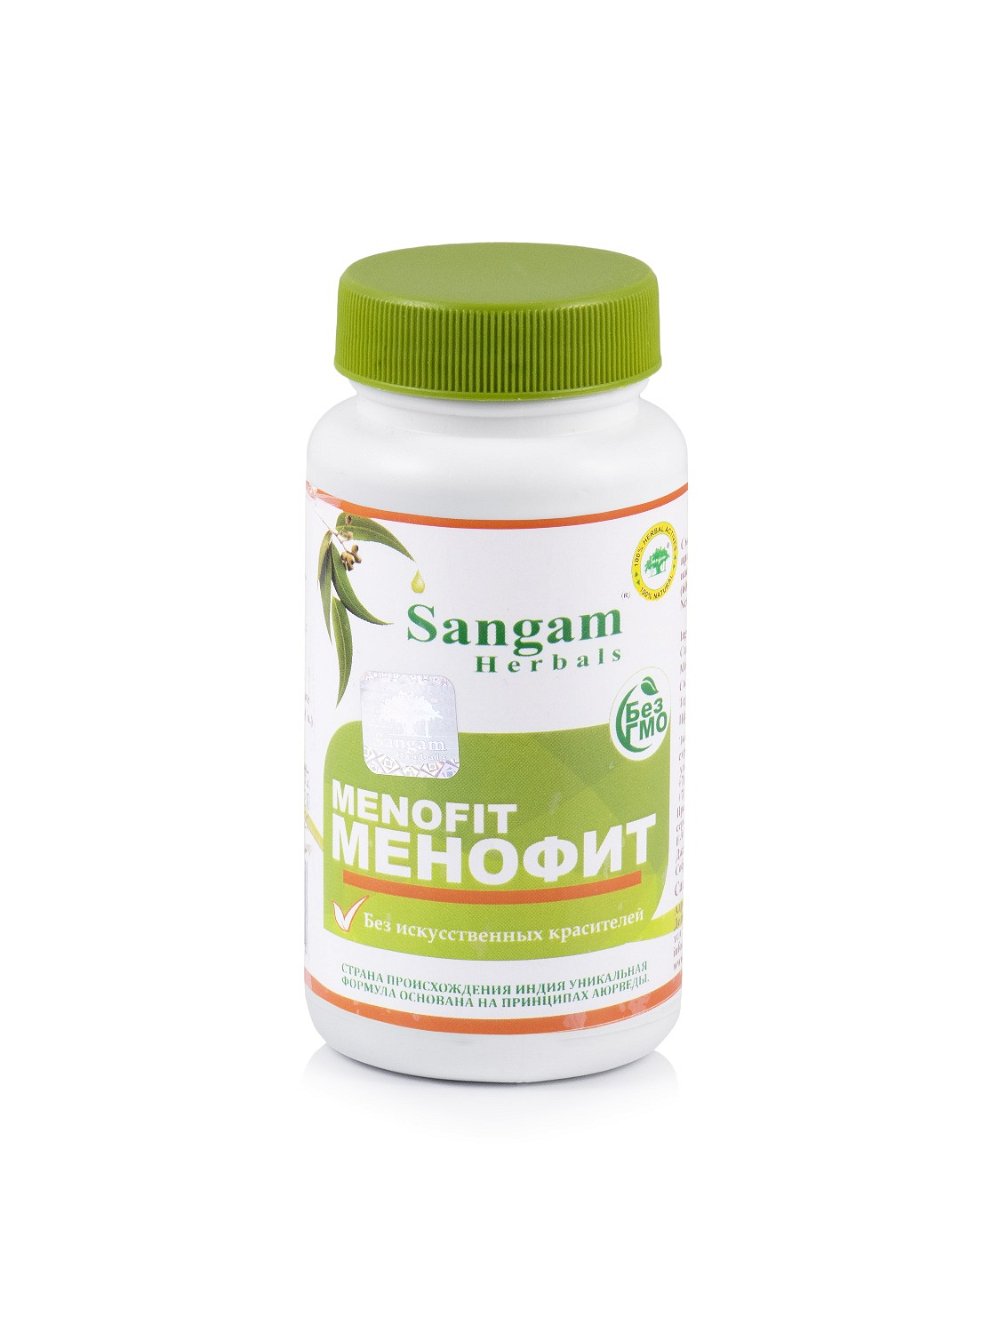 Менофит Sangam Herbals (60 таблеток), Менофит 